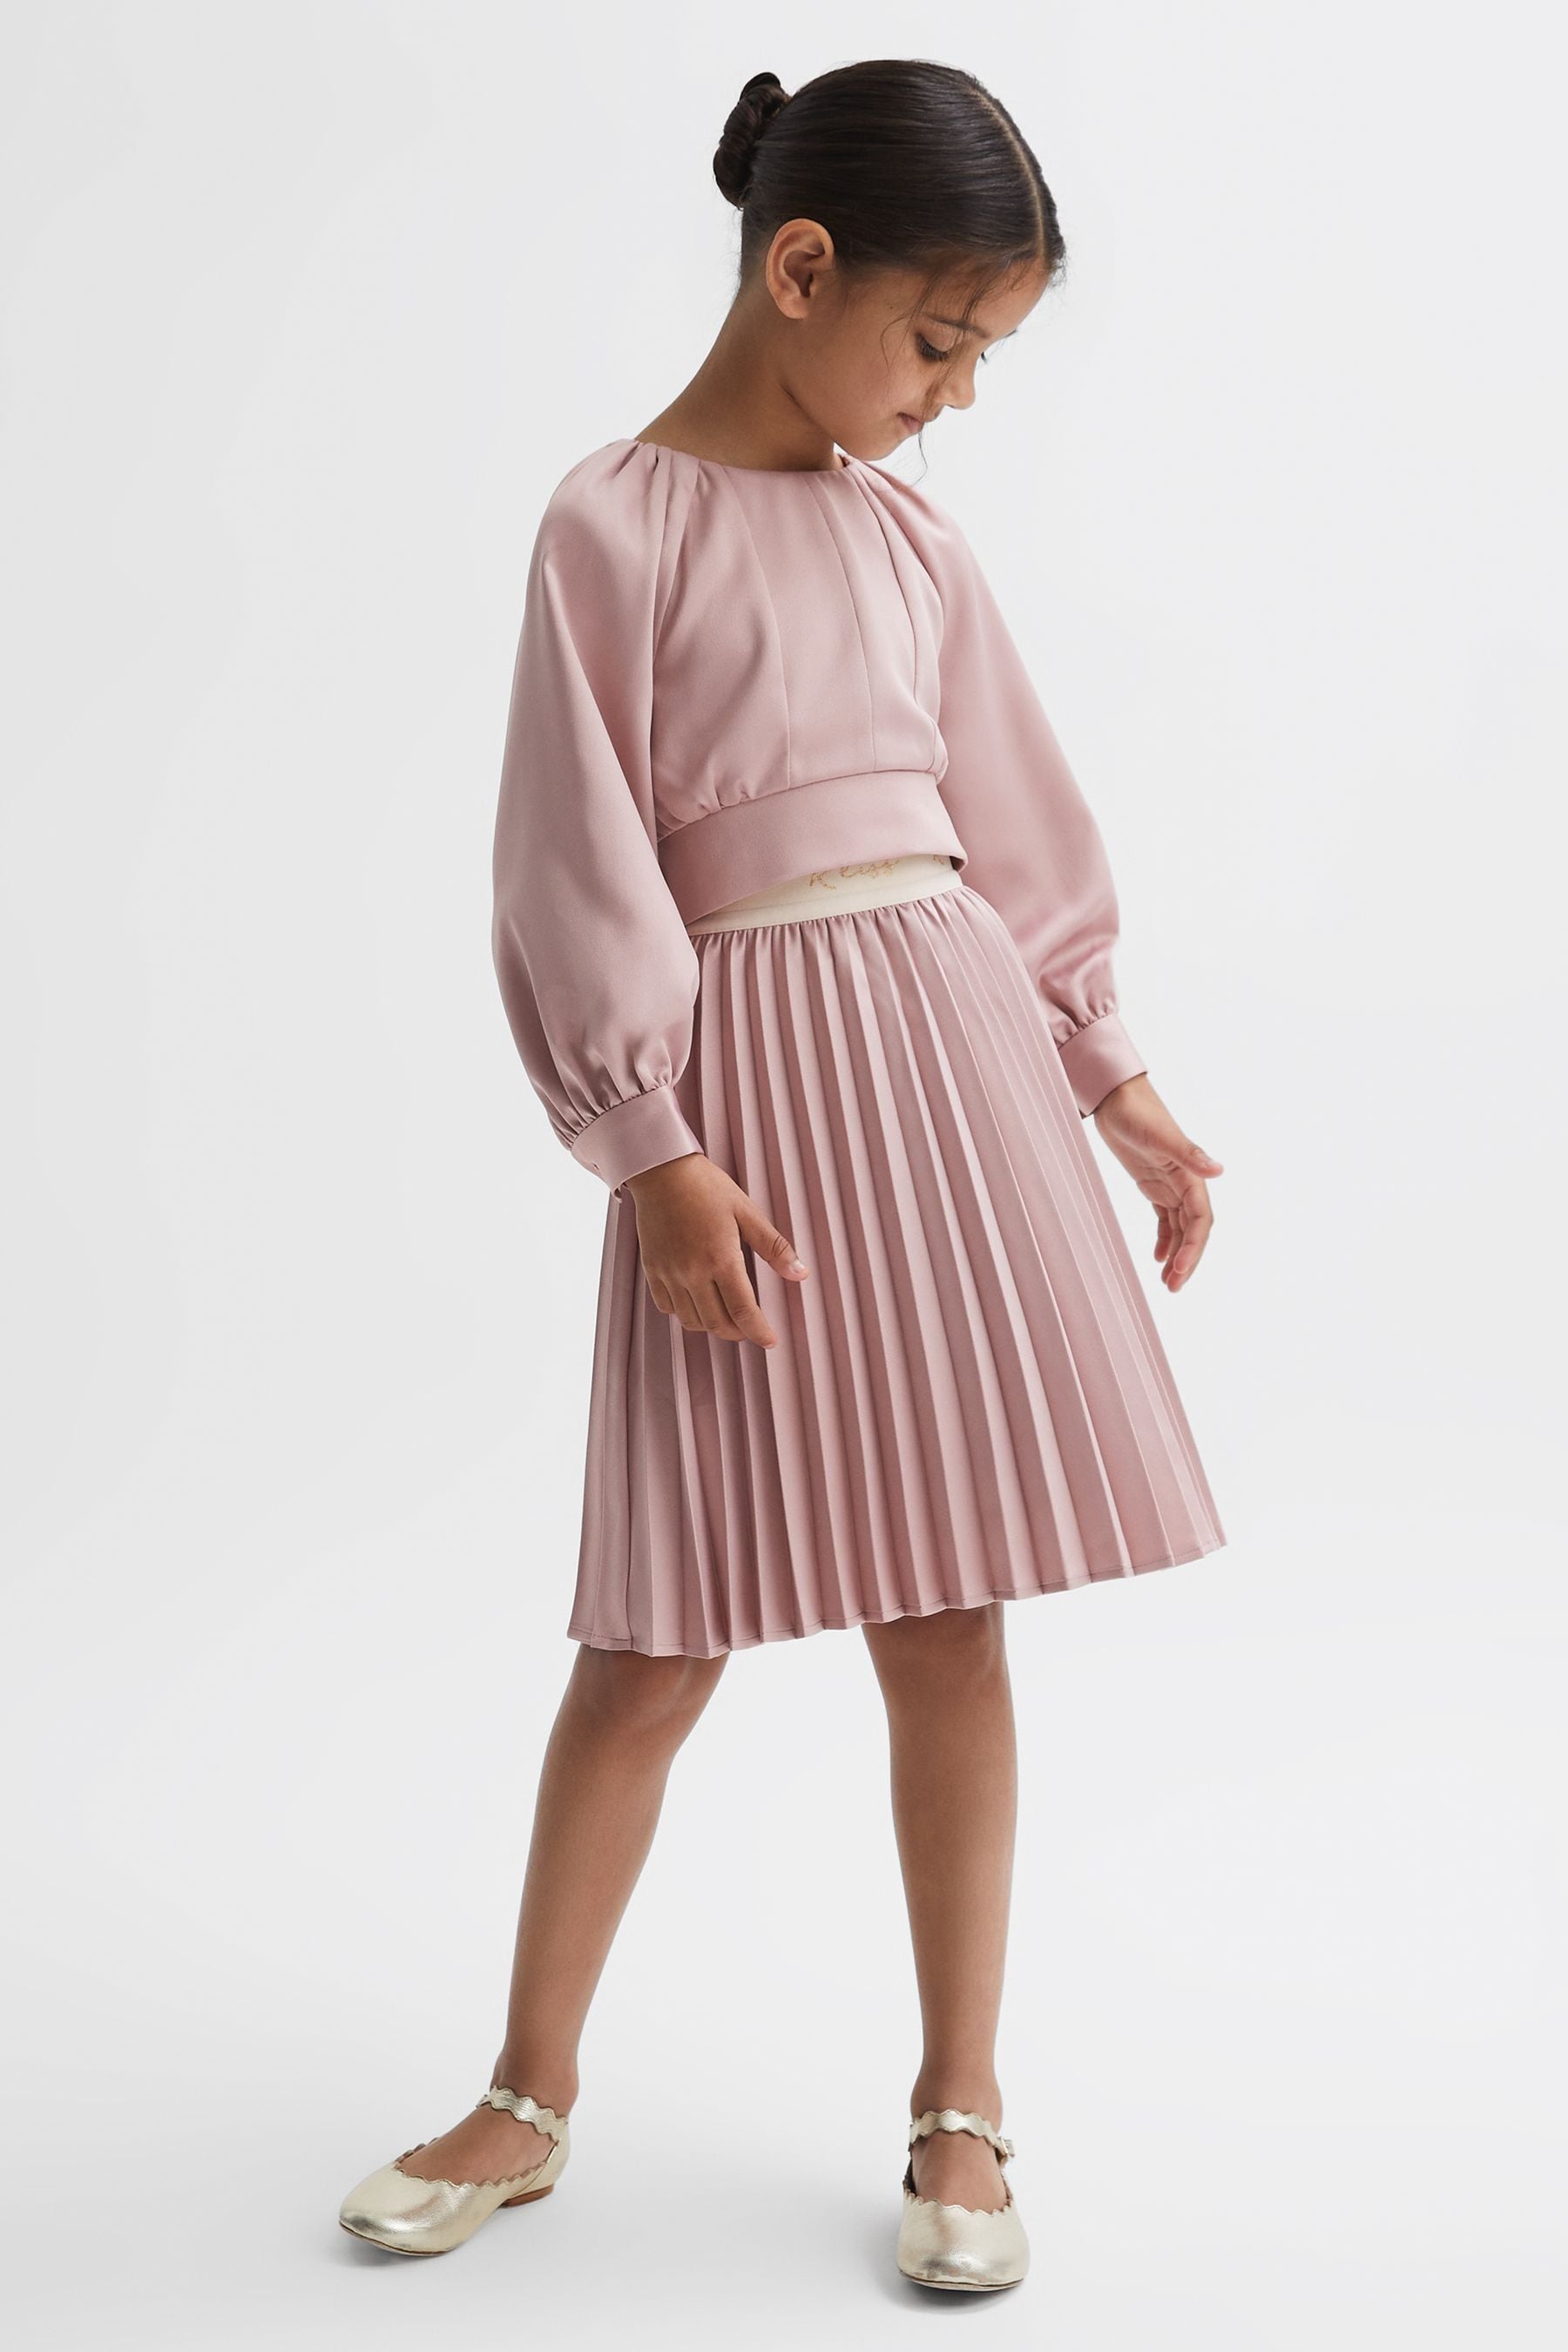 Reiss Ezra - Pink Senior Pleated Elasticated Skirt, Uk 12-13 Yrs